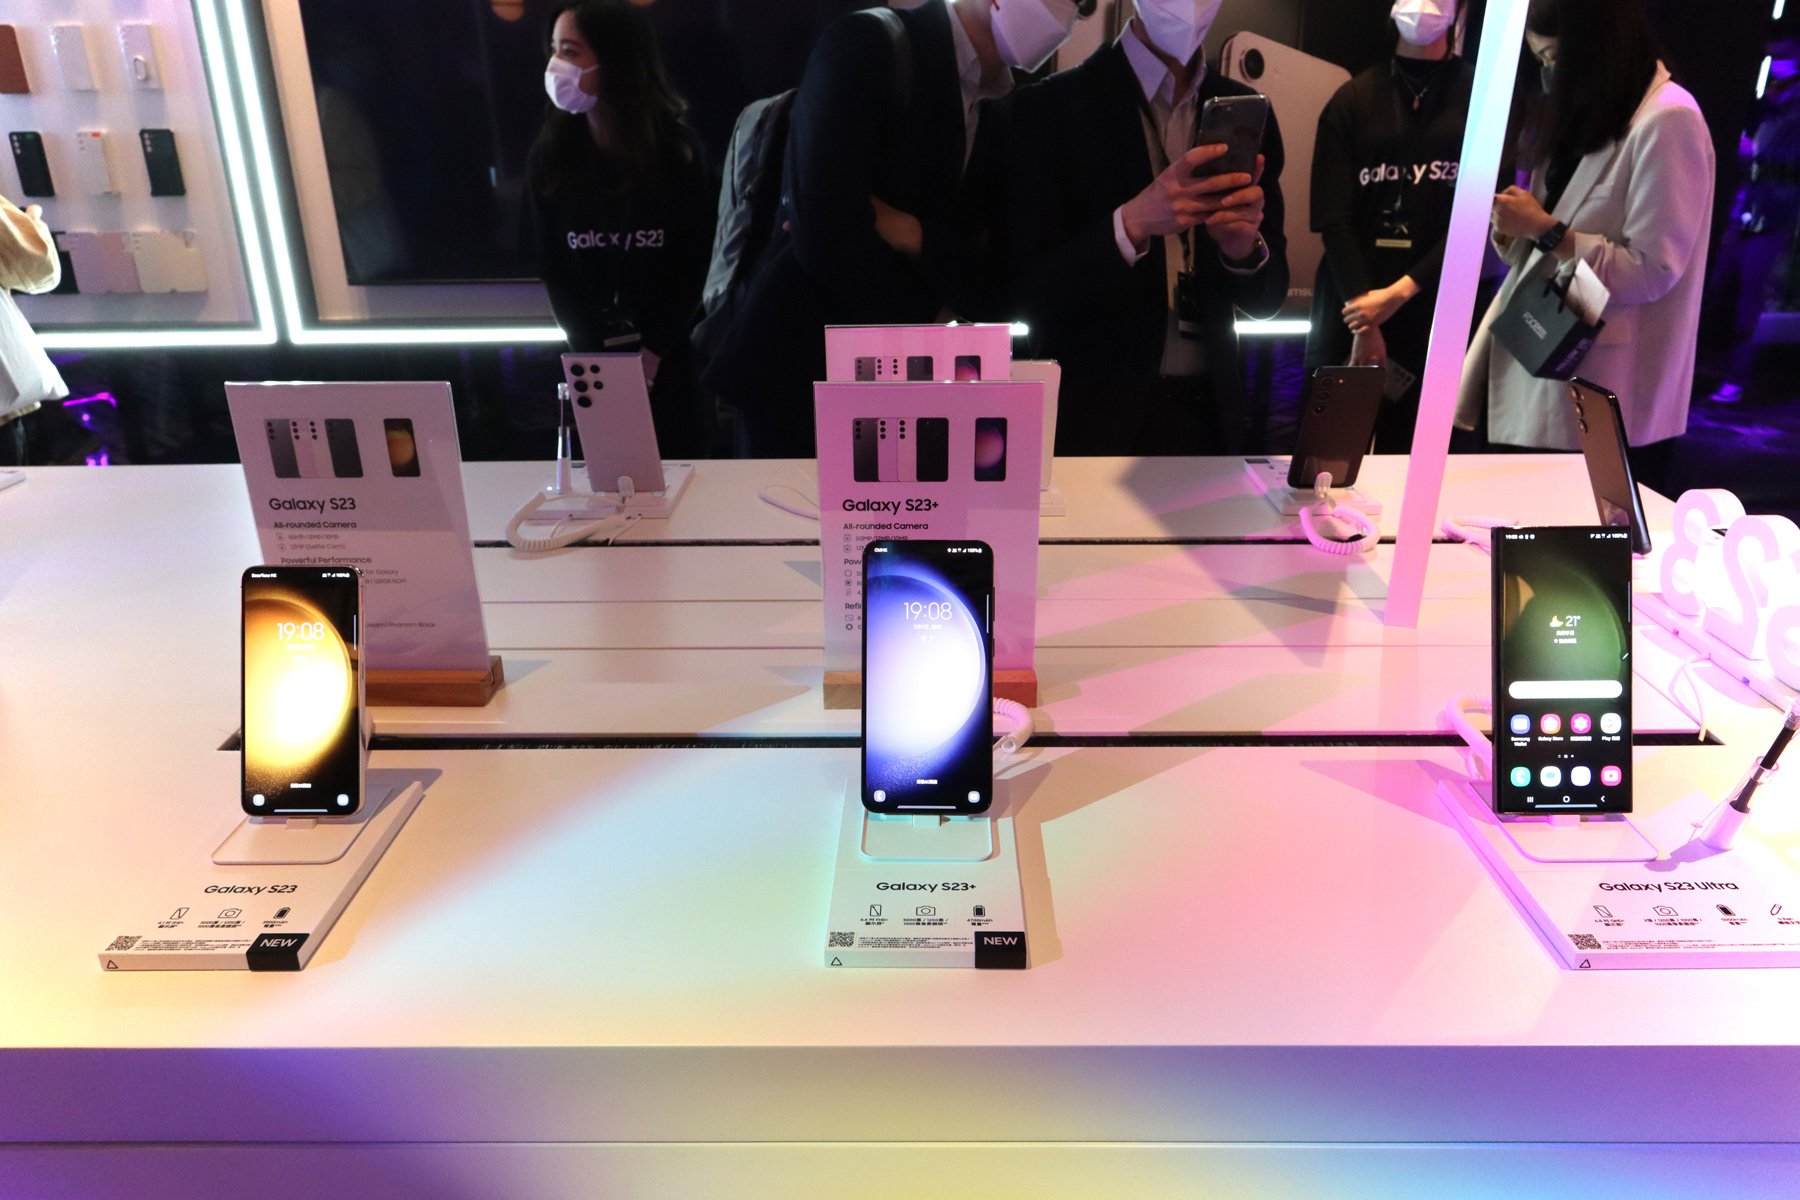 Samsung 在香港舉辦 Galaxy S23 系列手機發佈會，無論是 Galaxy S23、S23+ 或 S23 Ultra 都提供 4 款顏色可以選擇，同時公佈了規格、售價和推出日期。